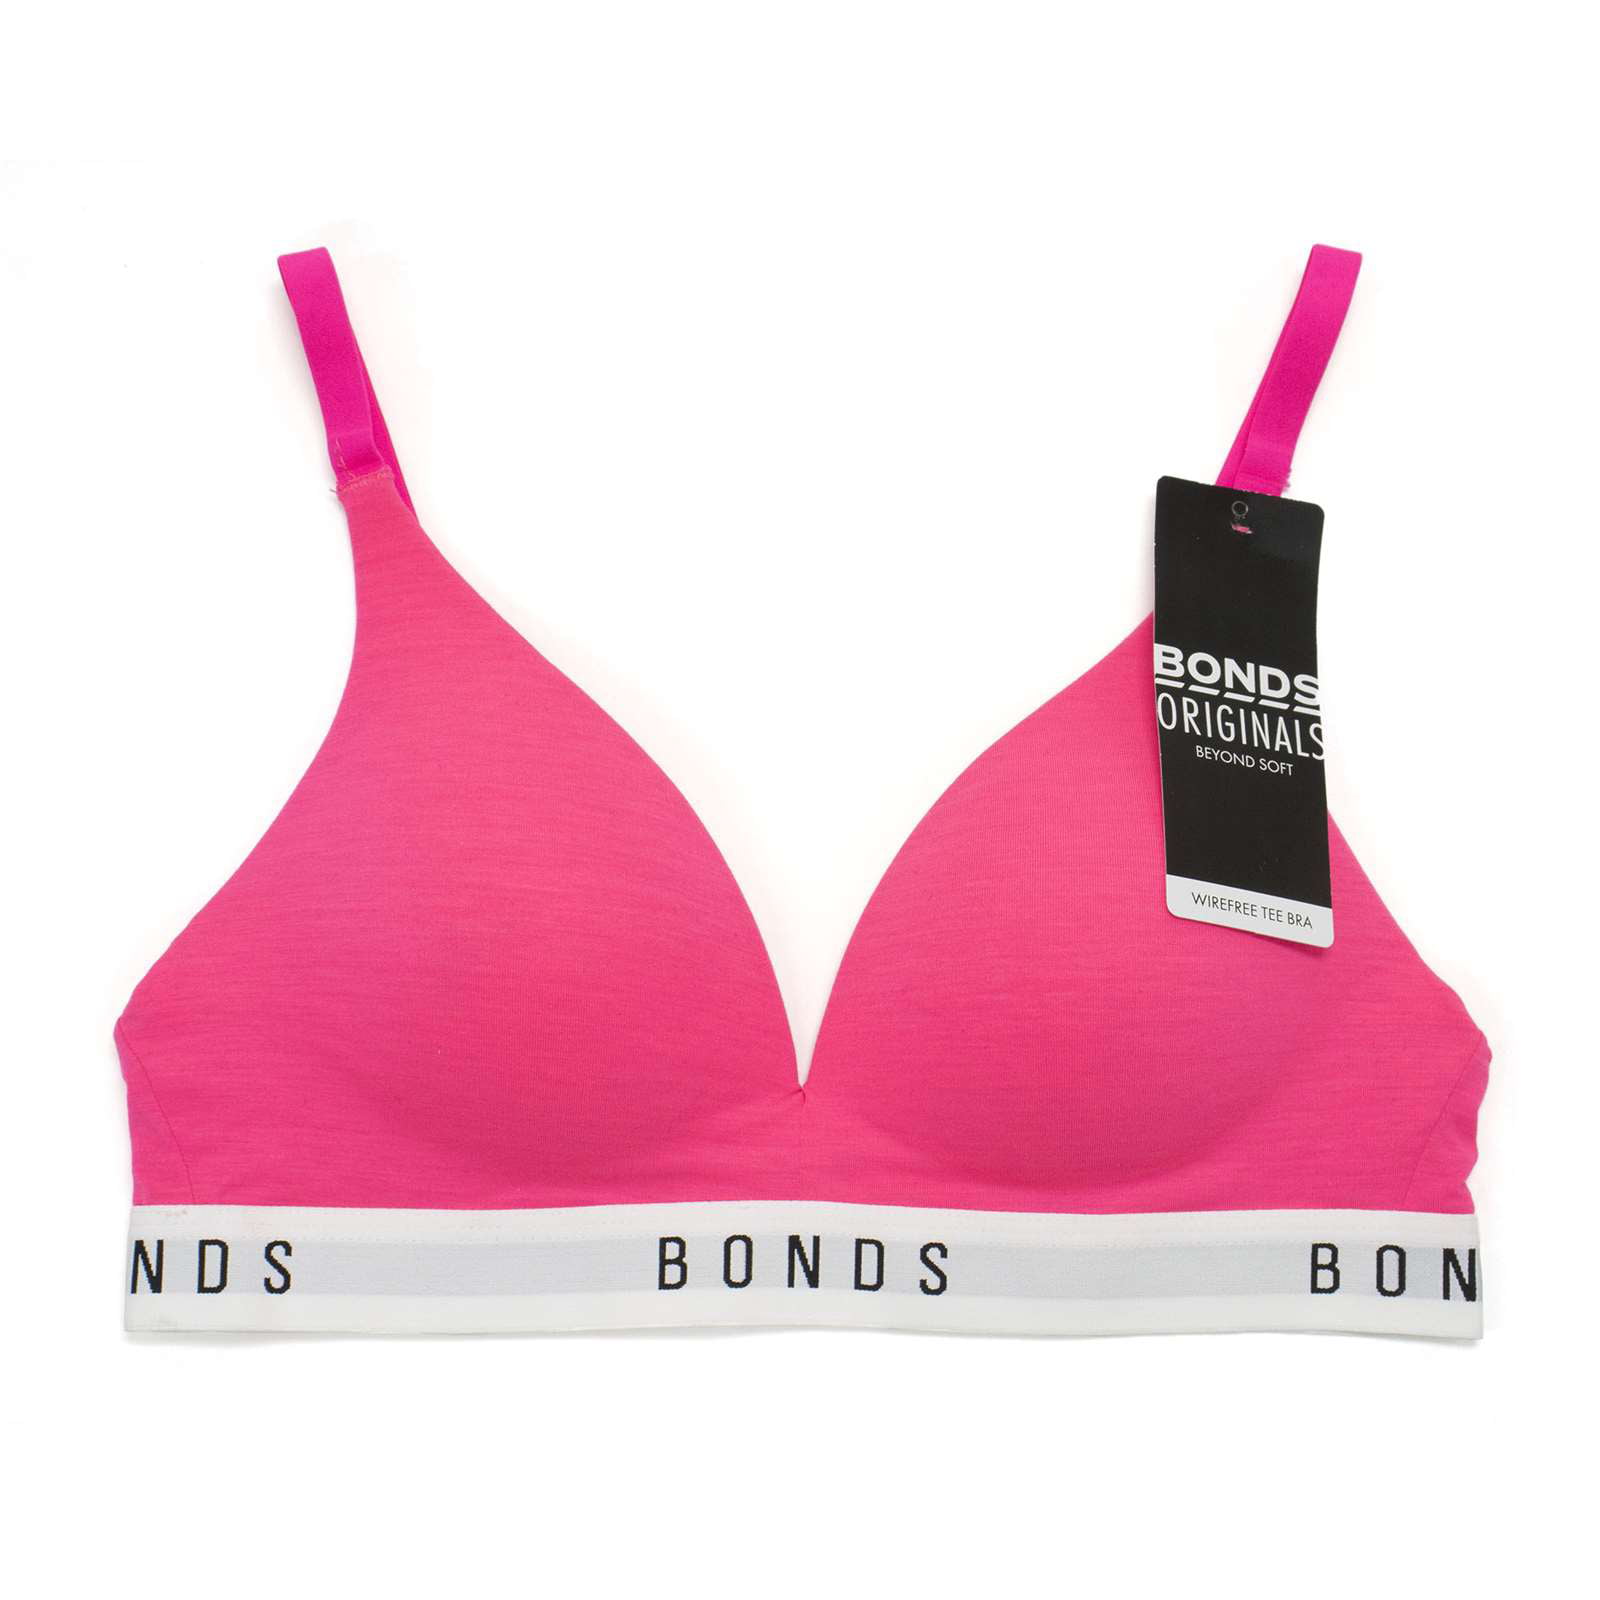 Bonds Originals Contour Triangle Bra In Pink